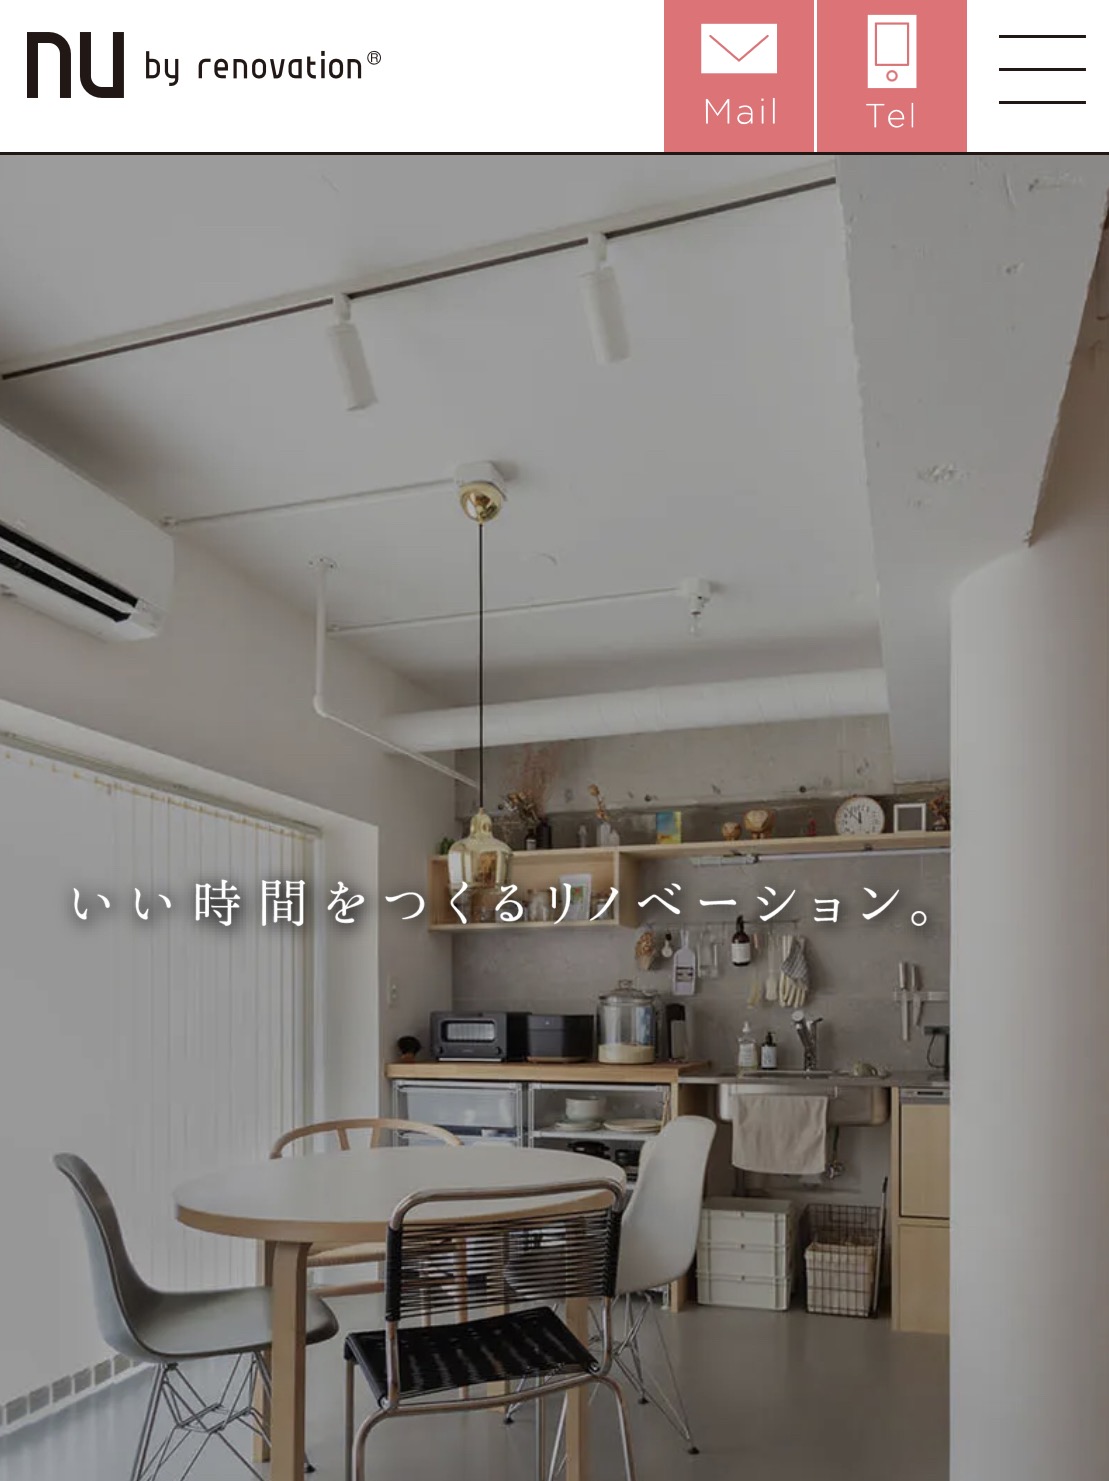 nu by renovation公式サイト